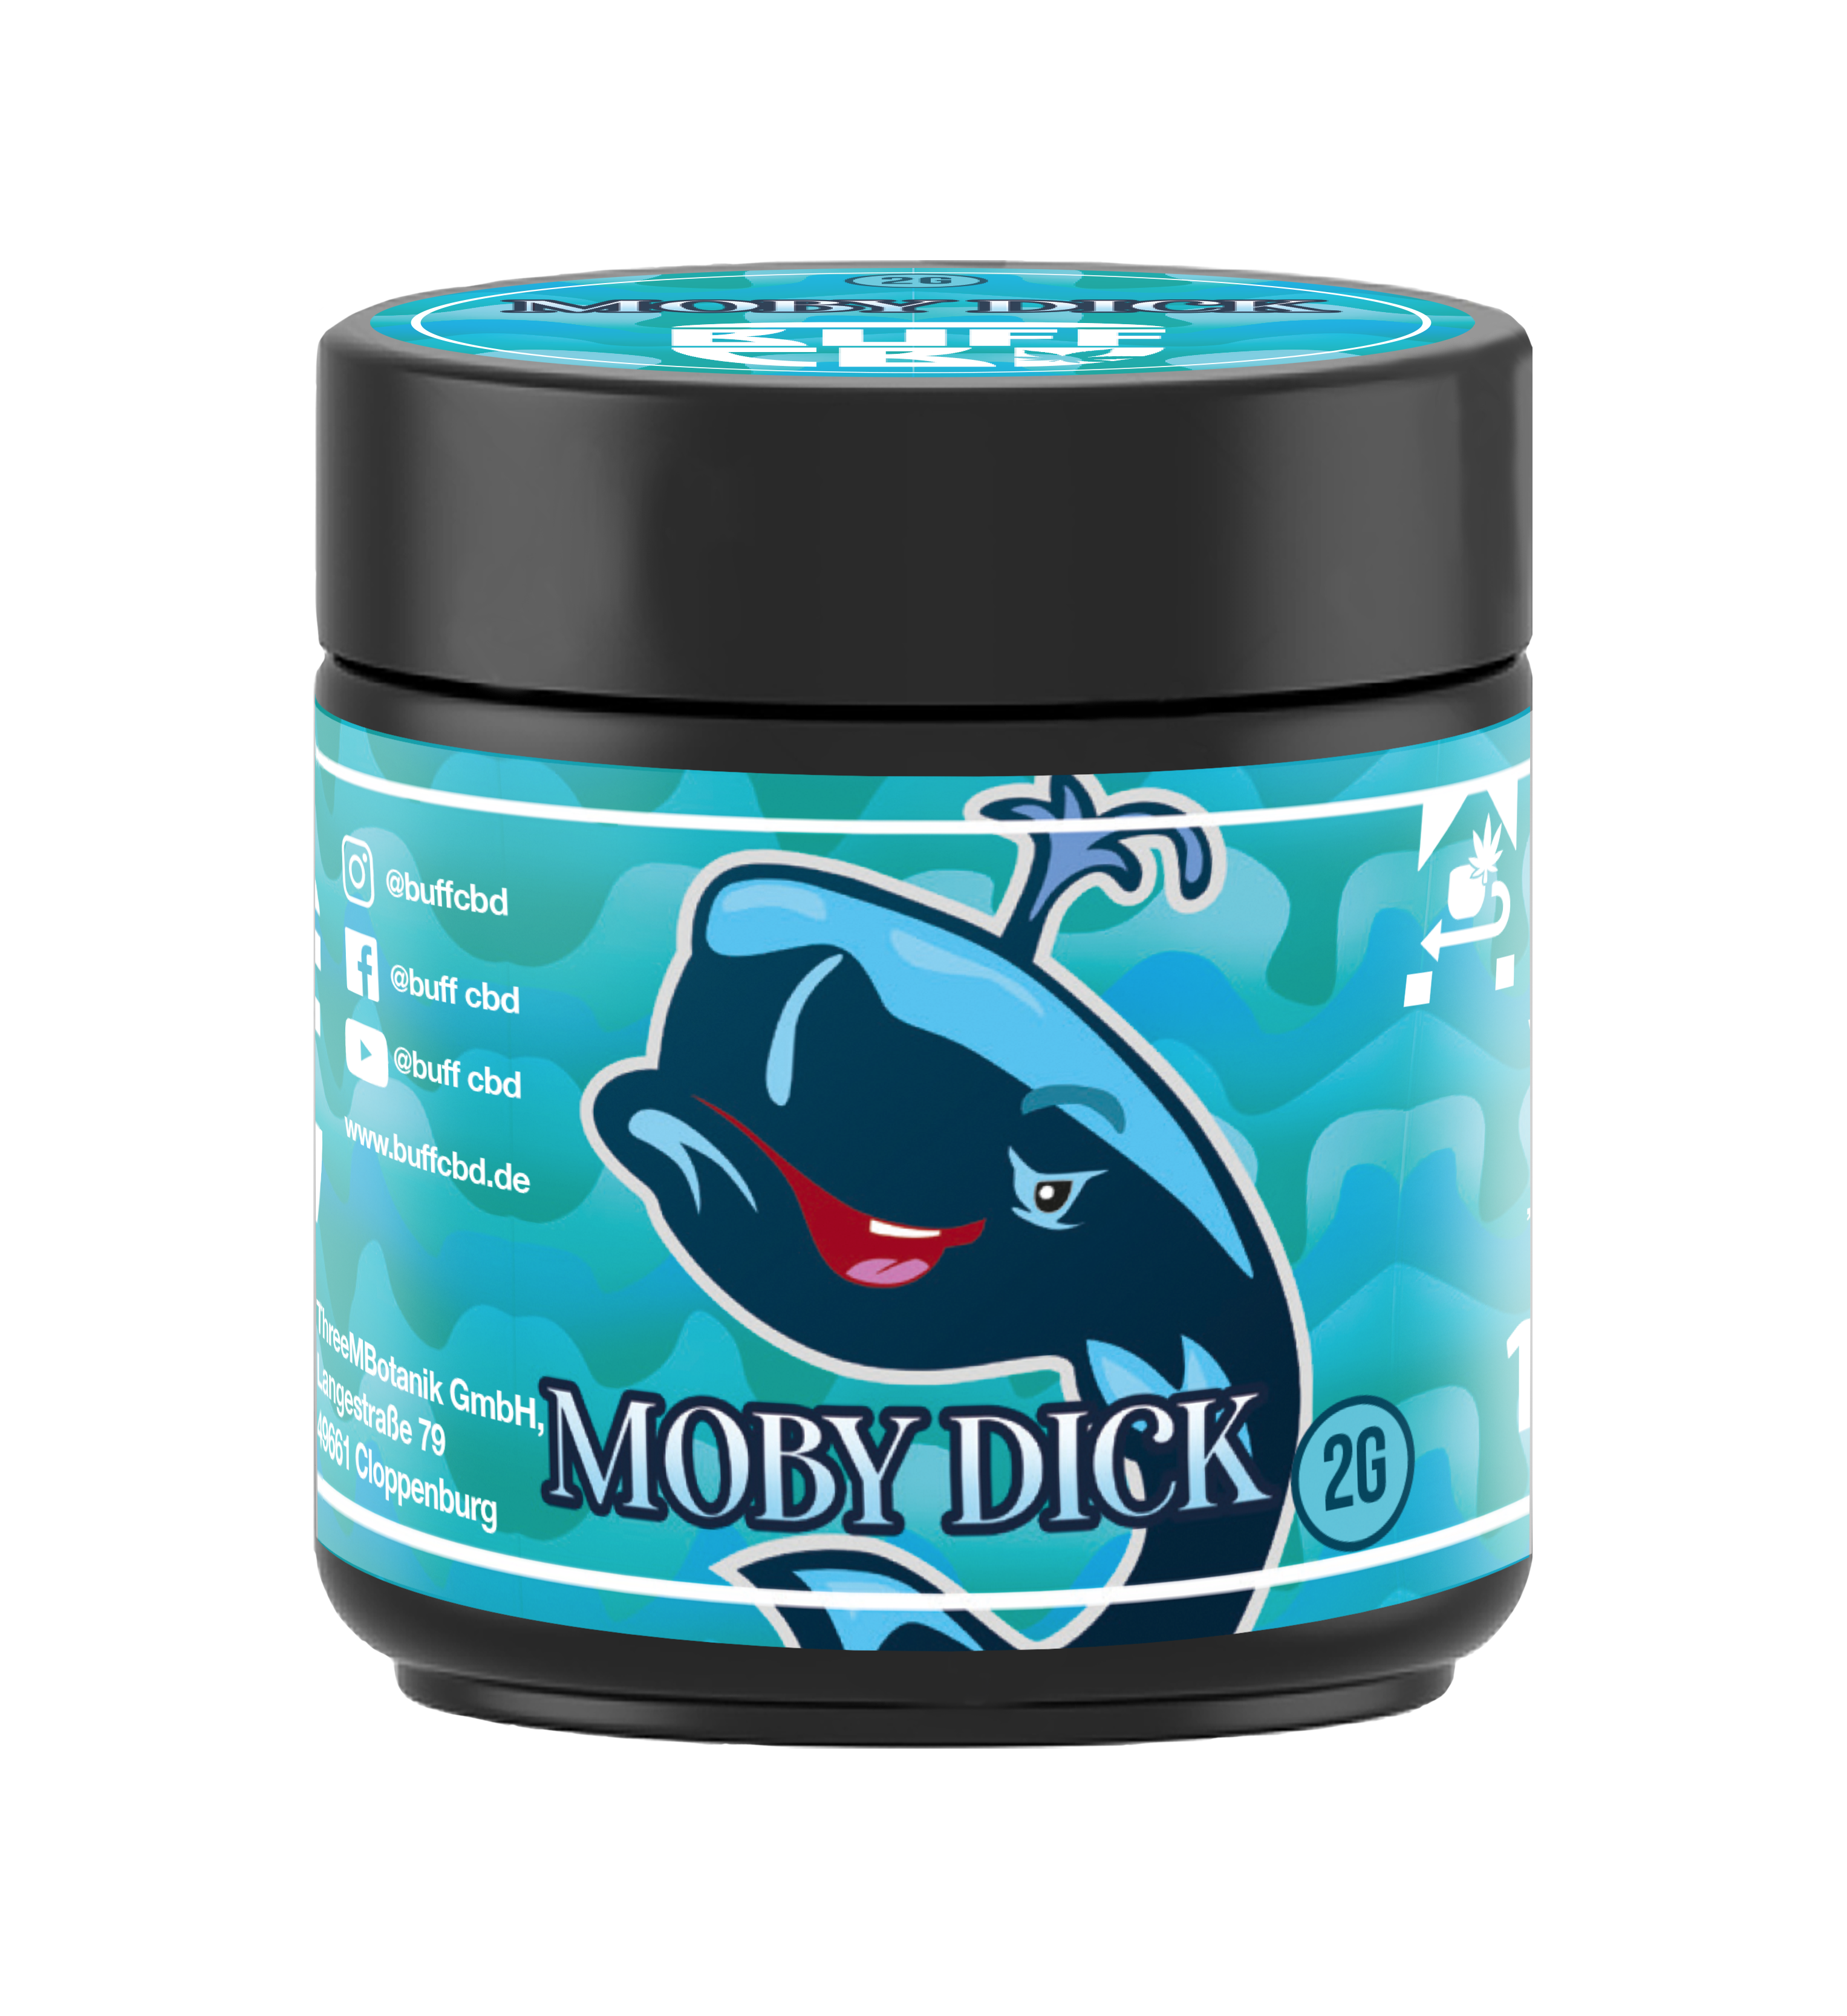 Mobby Dick - 2g CBD-Blüte in Glas